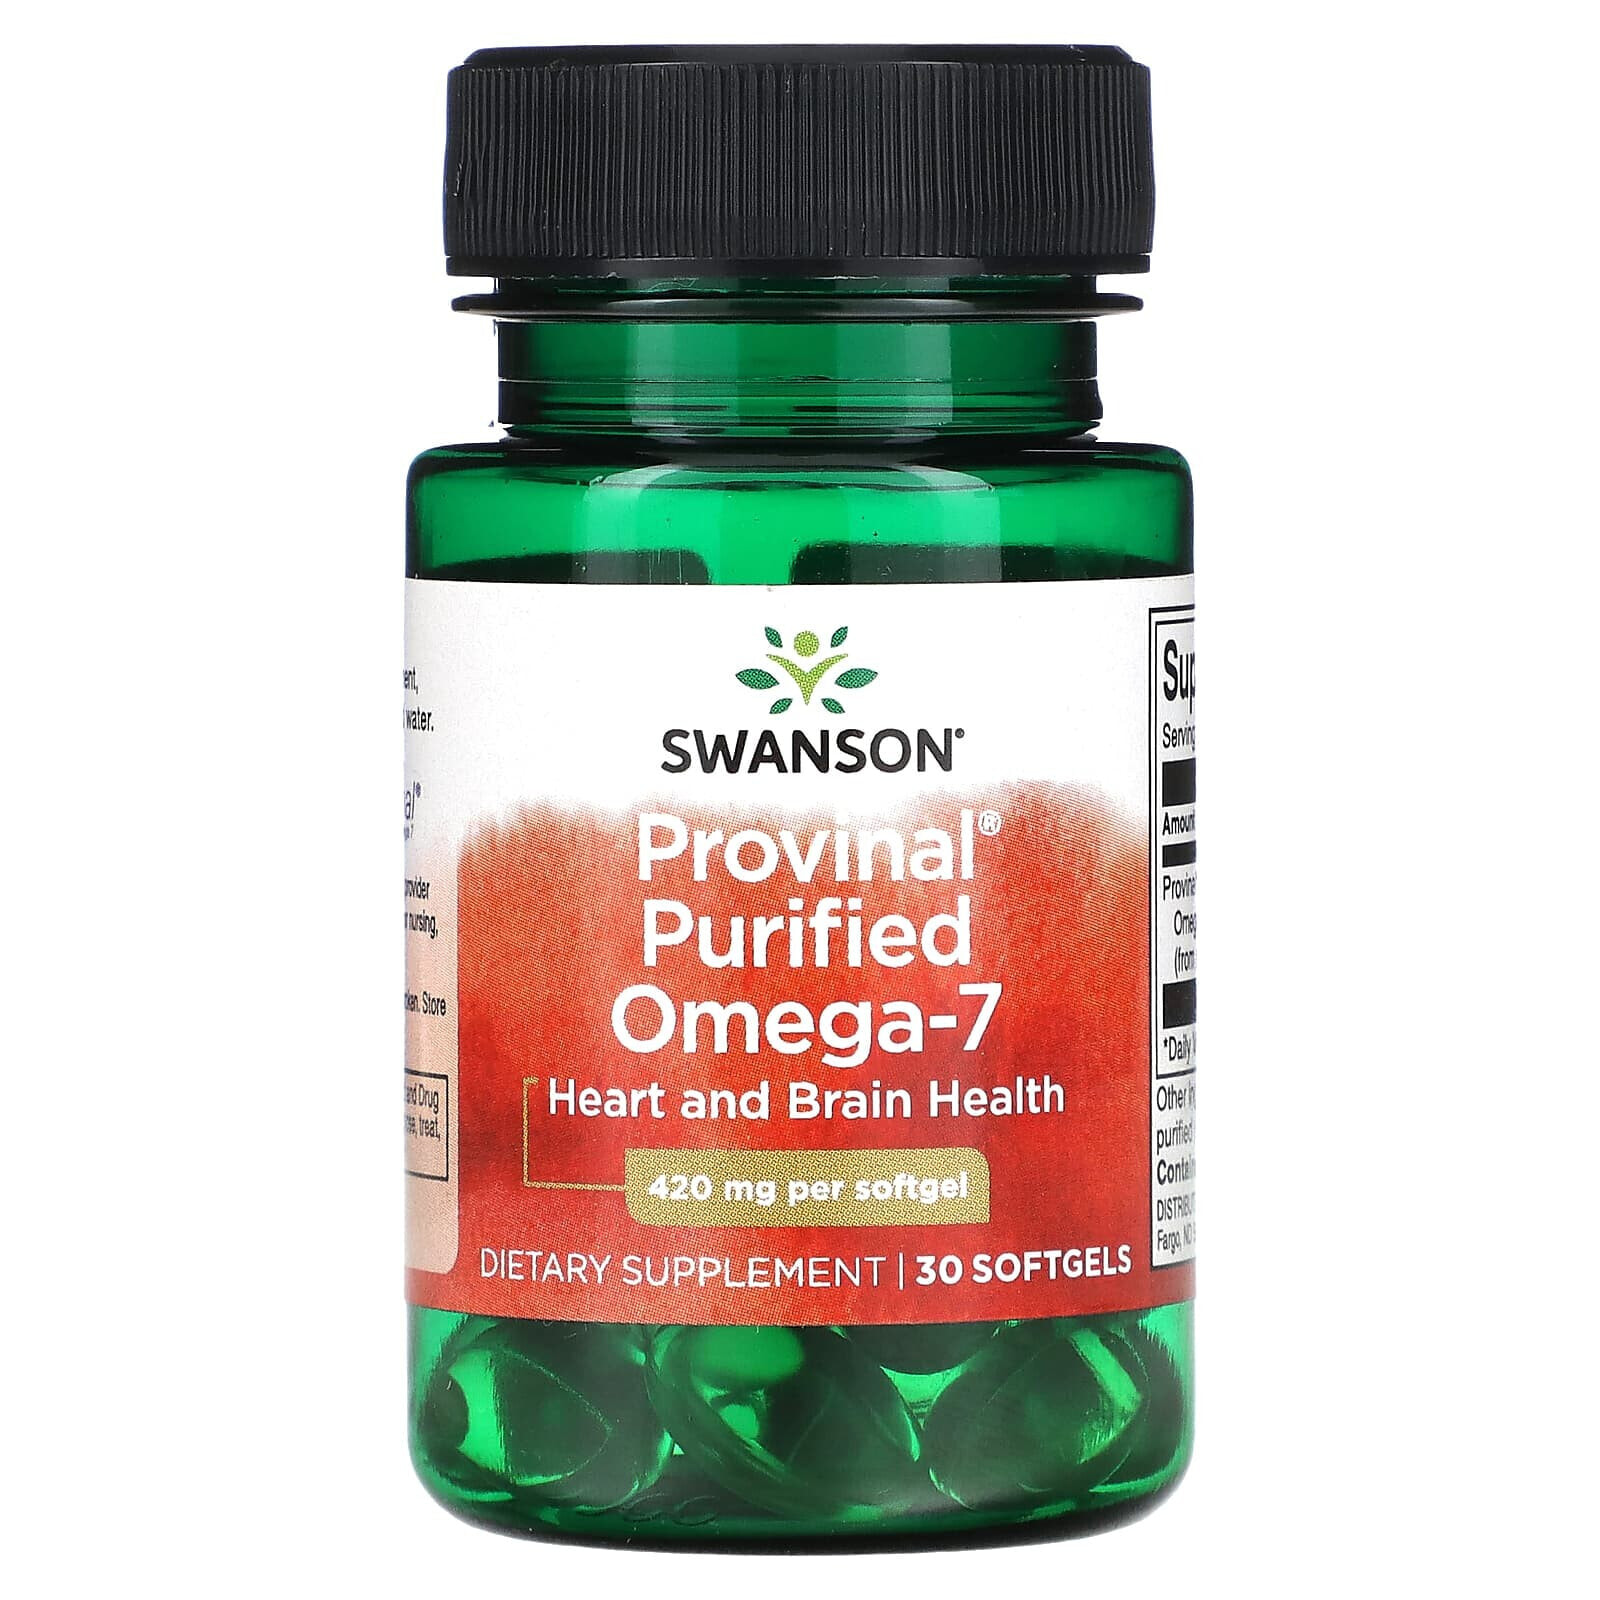 Swanson, Provinal, очищенная омега-7, 420 мг, 30 мягких таблеток